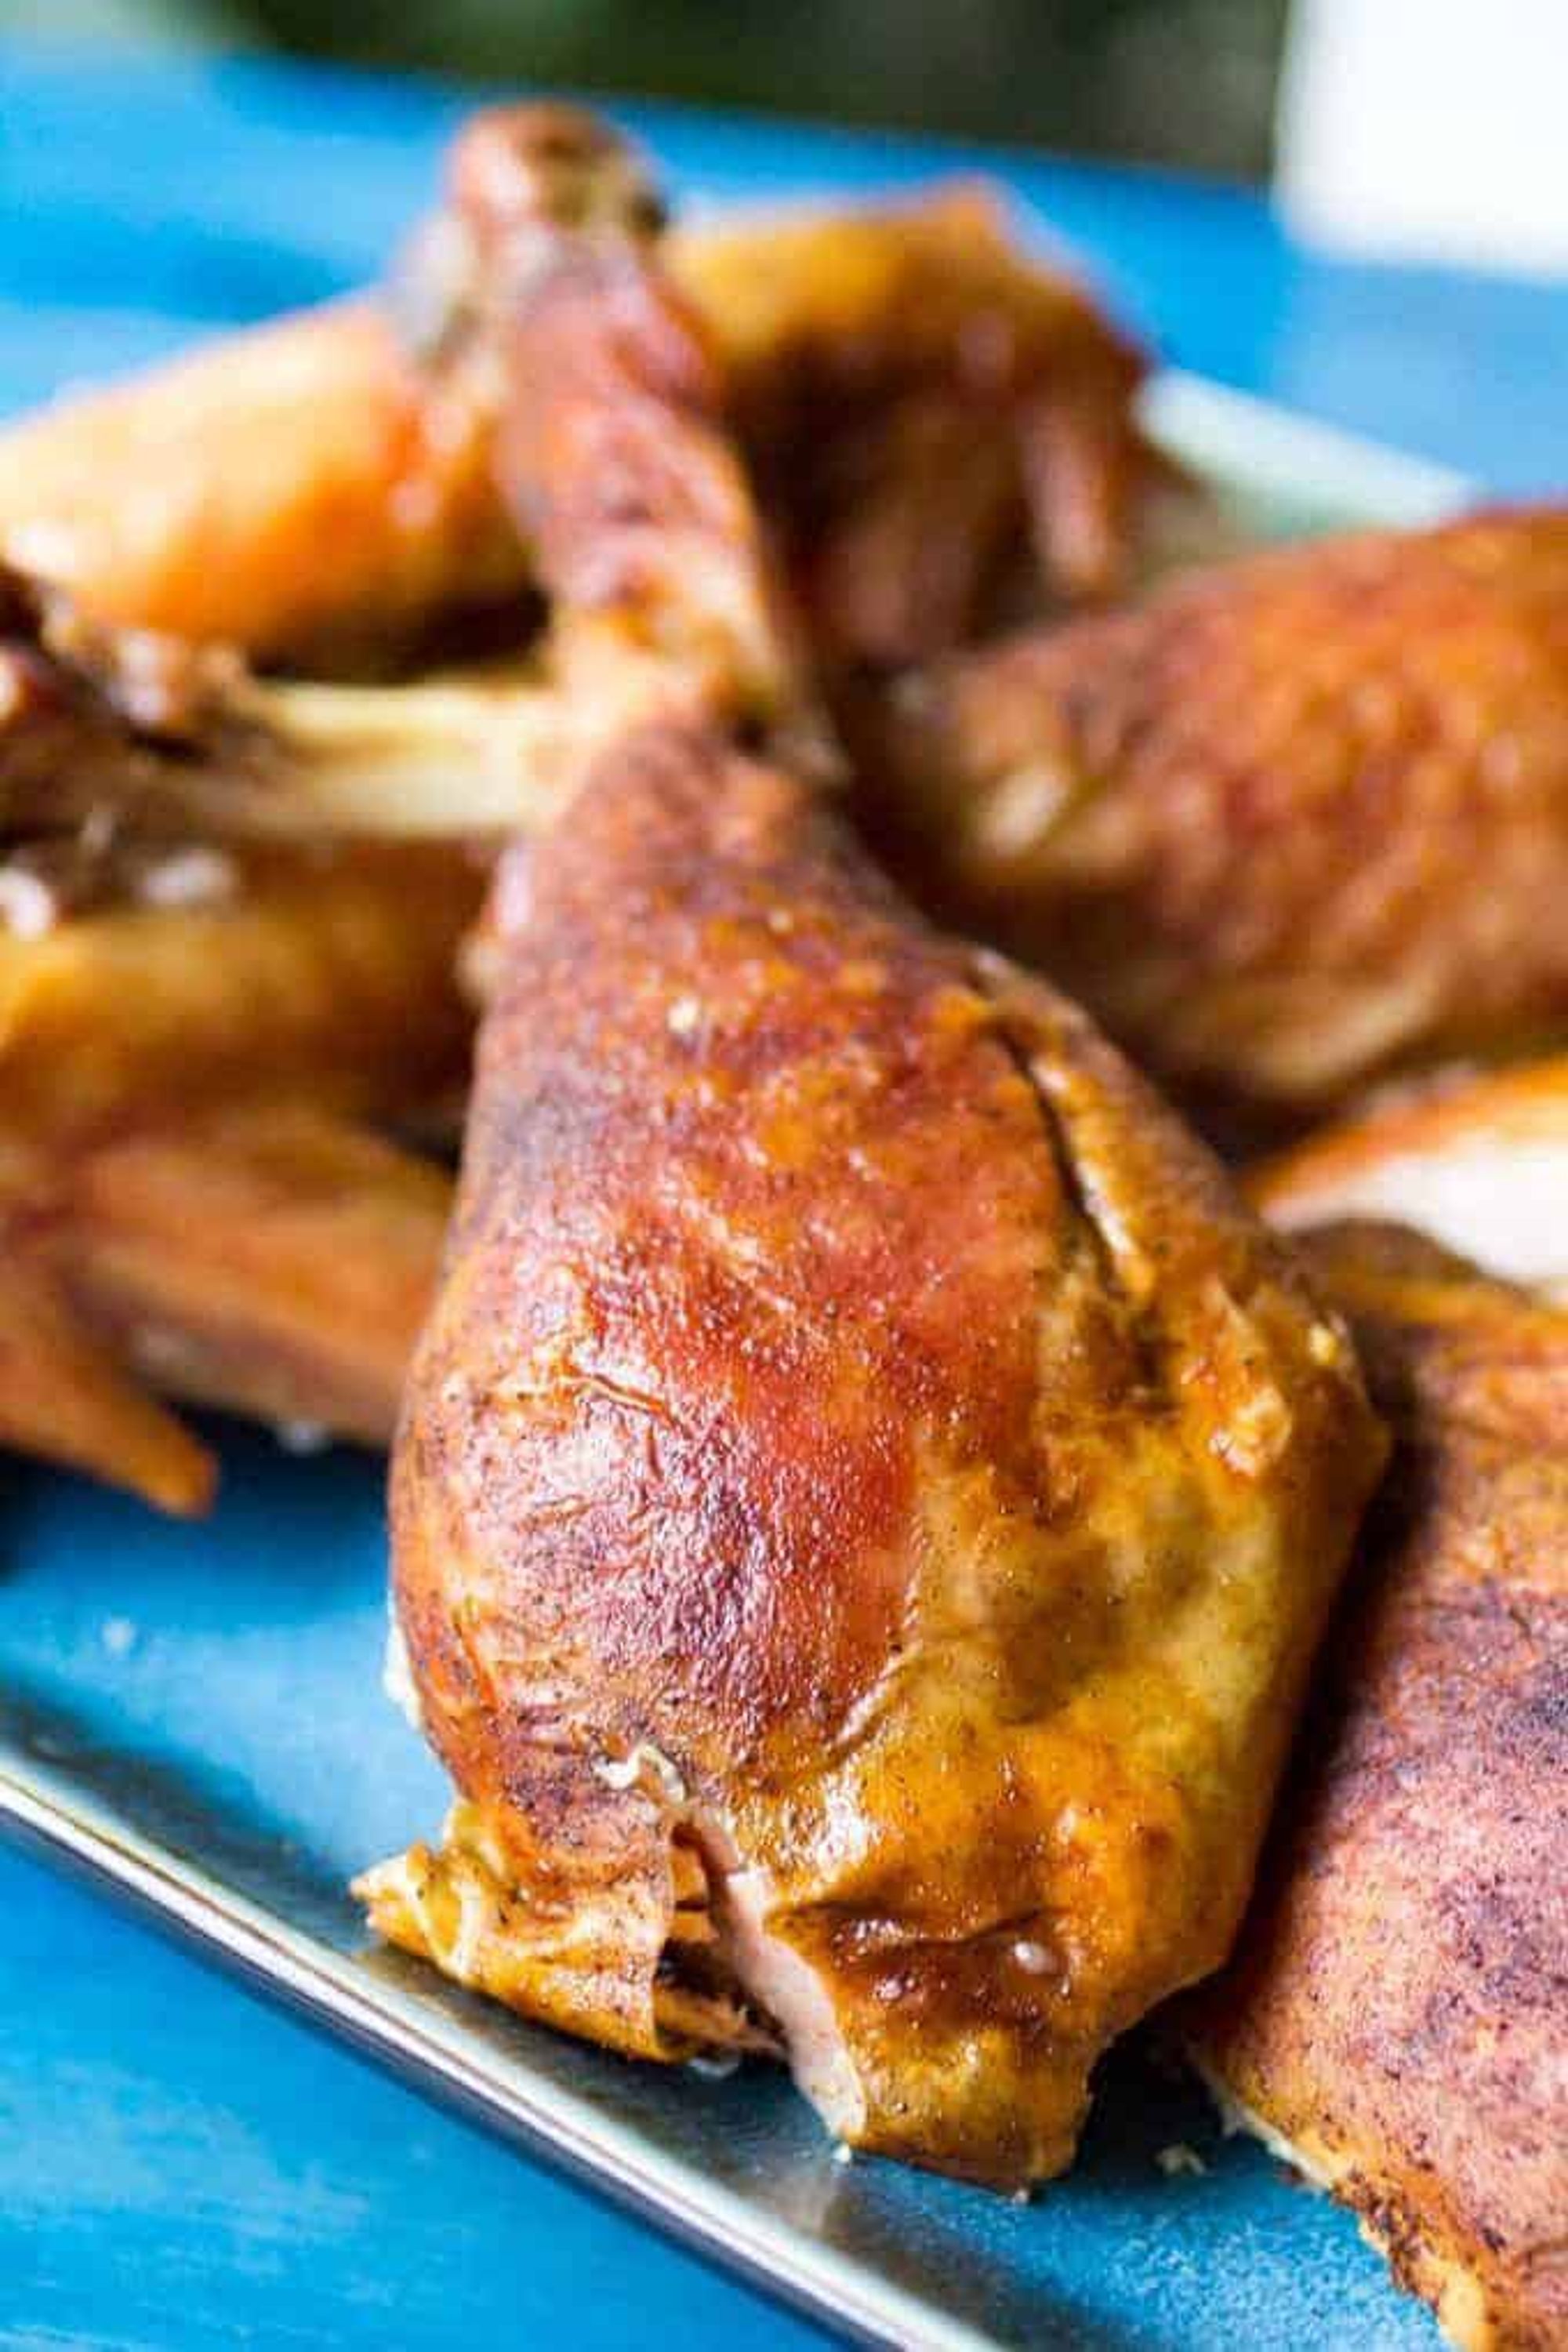 Traeger Grill Smoked Turkey - My Recipe Magic